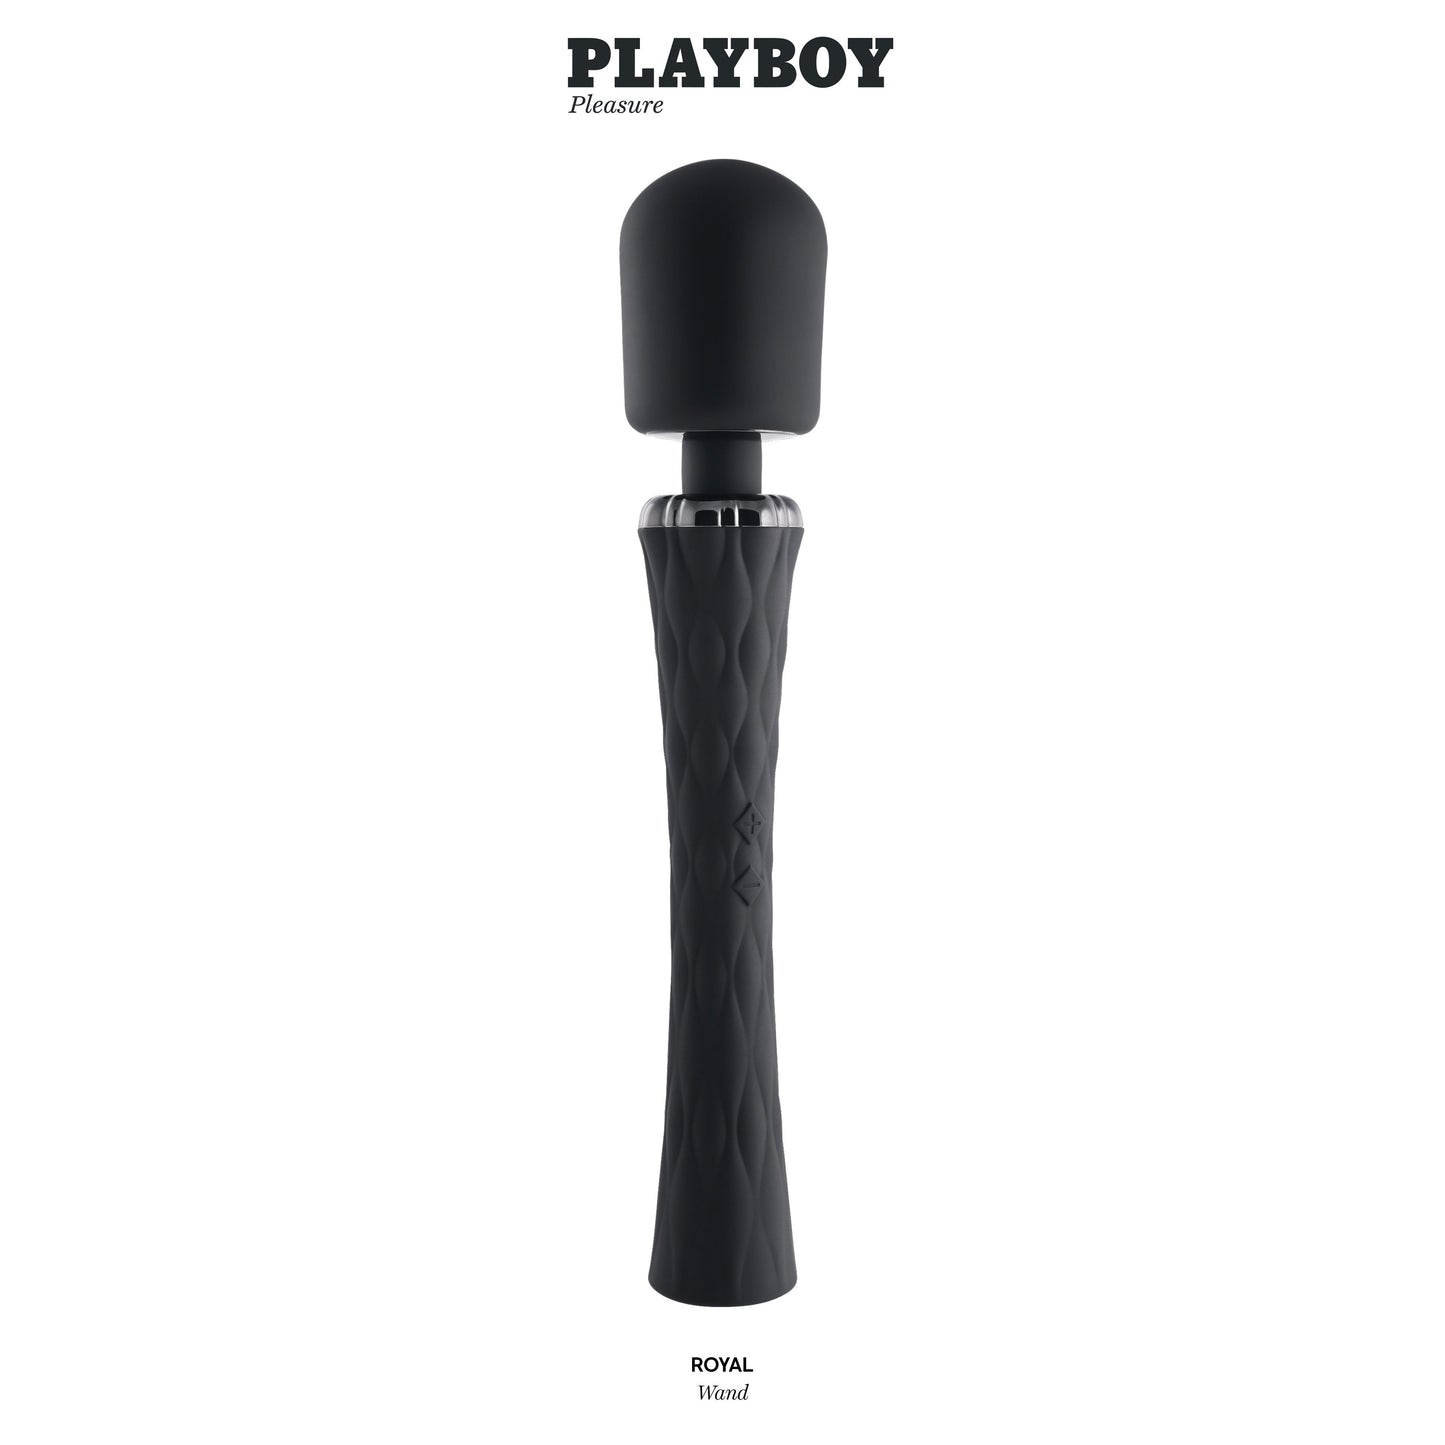 Playboy Pleasure - Royal - Wand - Black